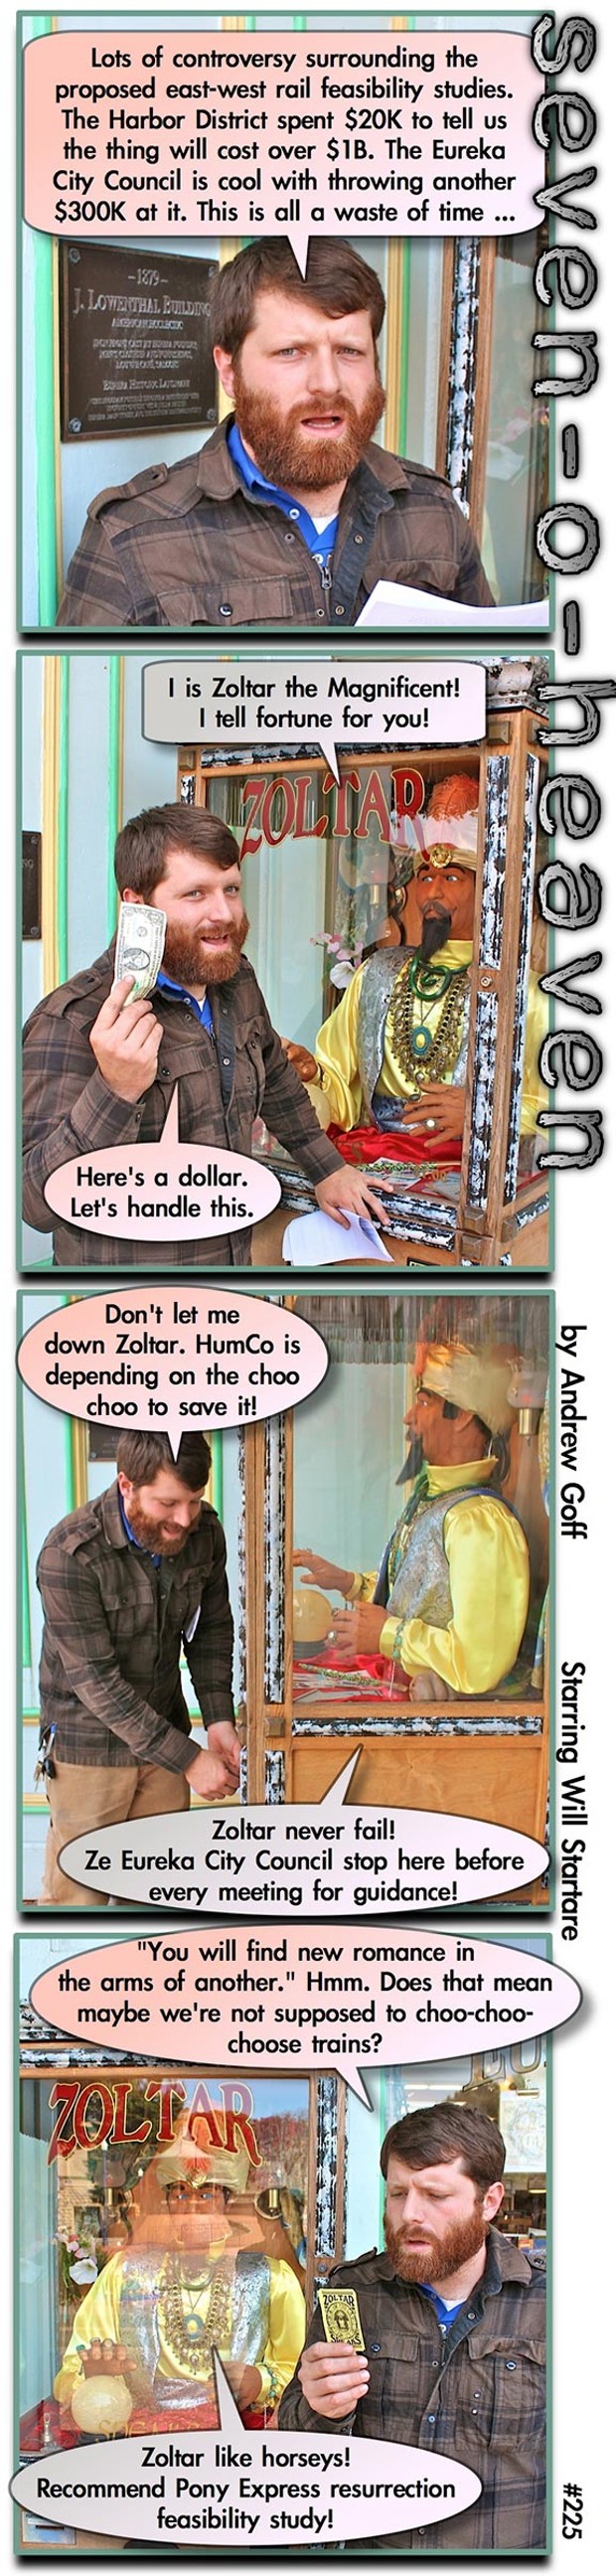 Zoltar Tells a Fortune